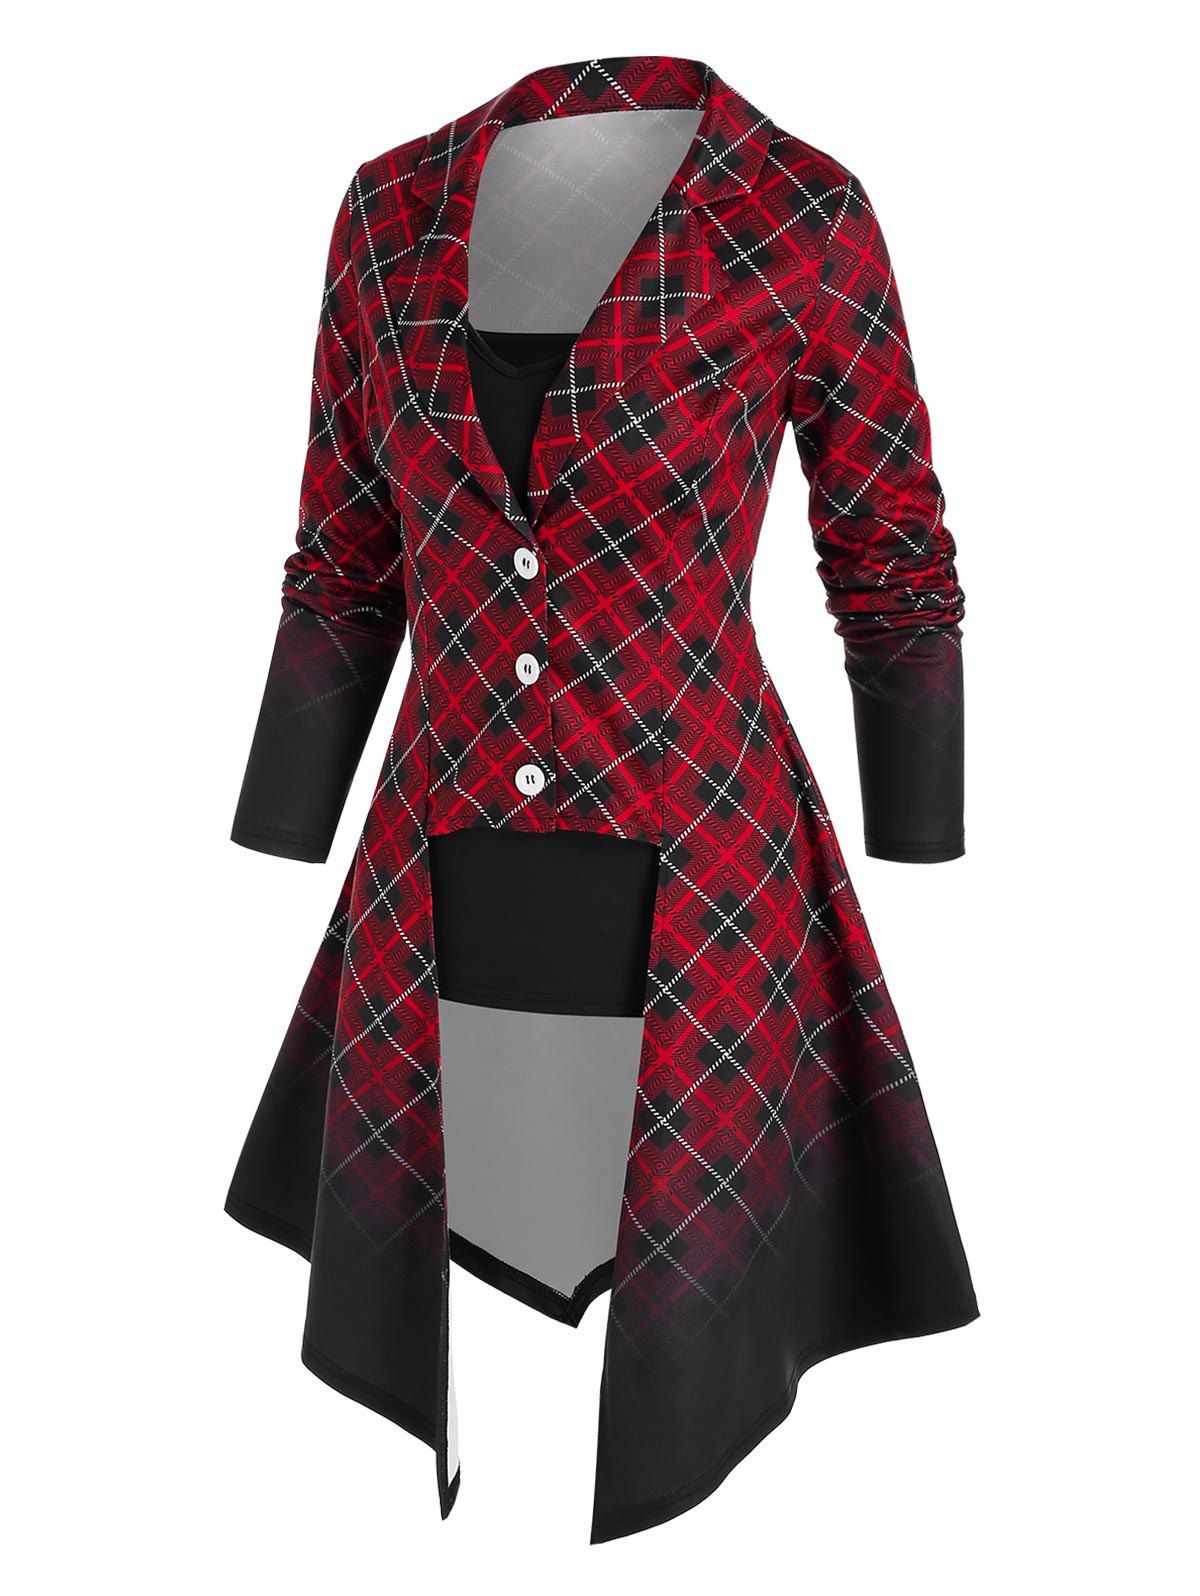 Irregular Ombre Plaid Coat and Camisole Set - BLACK M